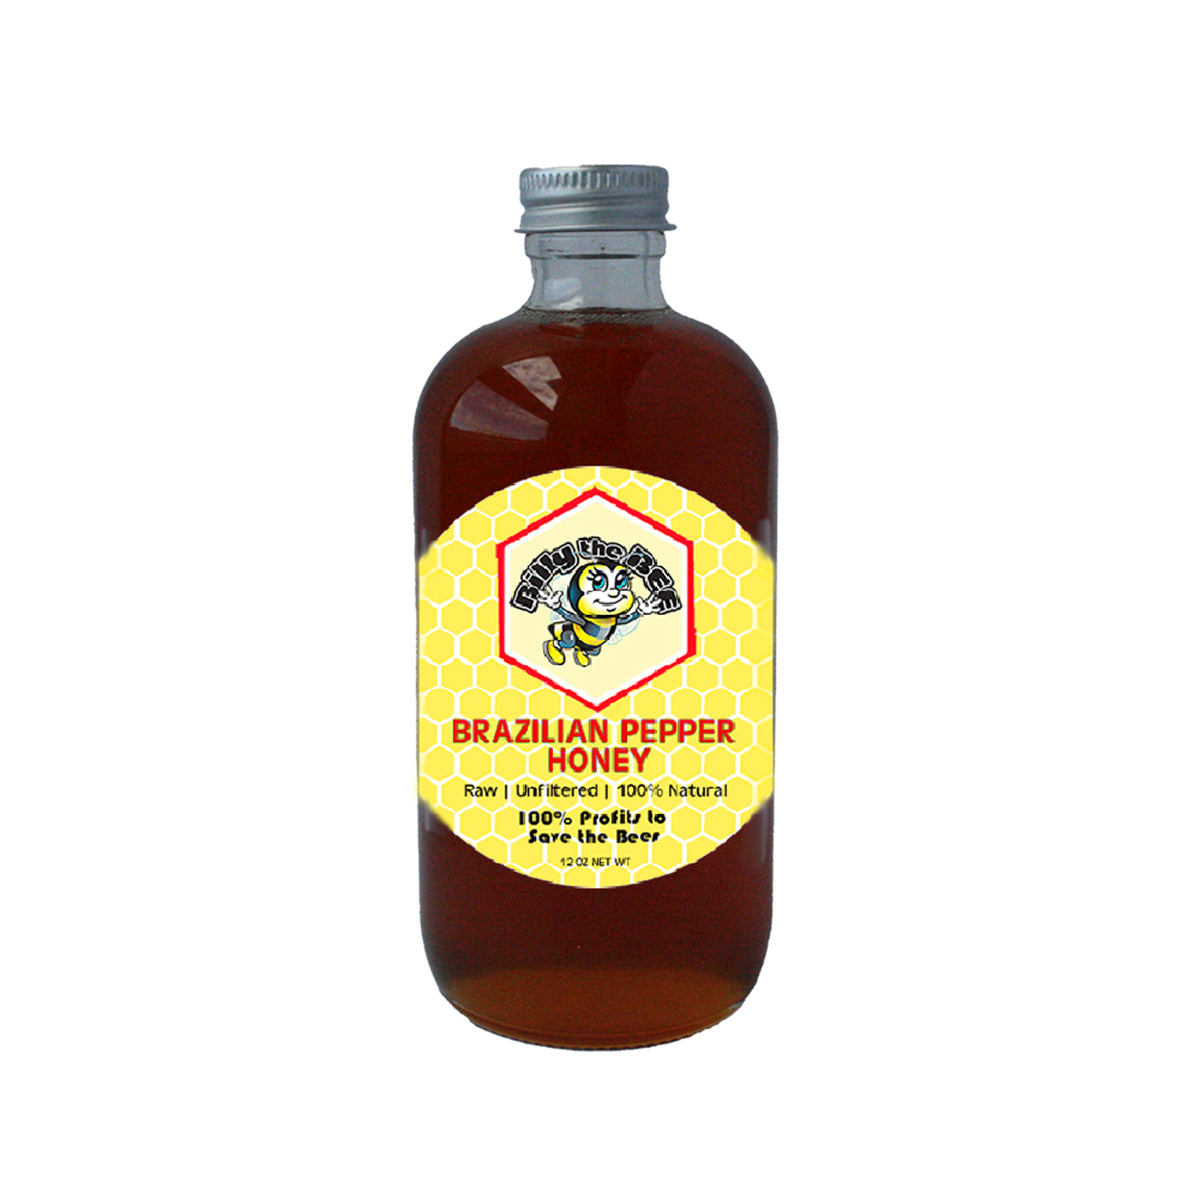 Brazillian Honey from Billy the bee brand